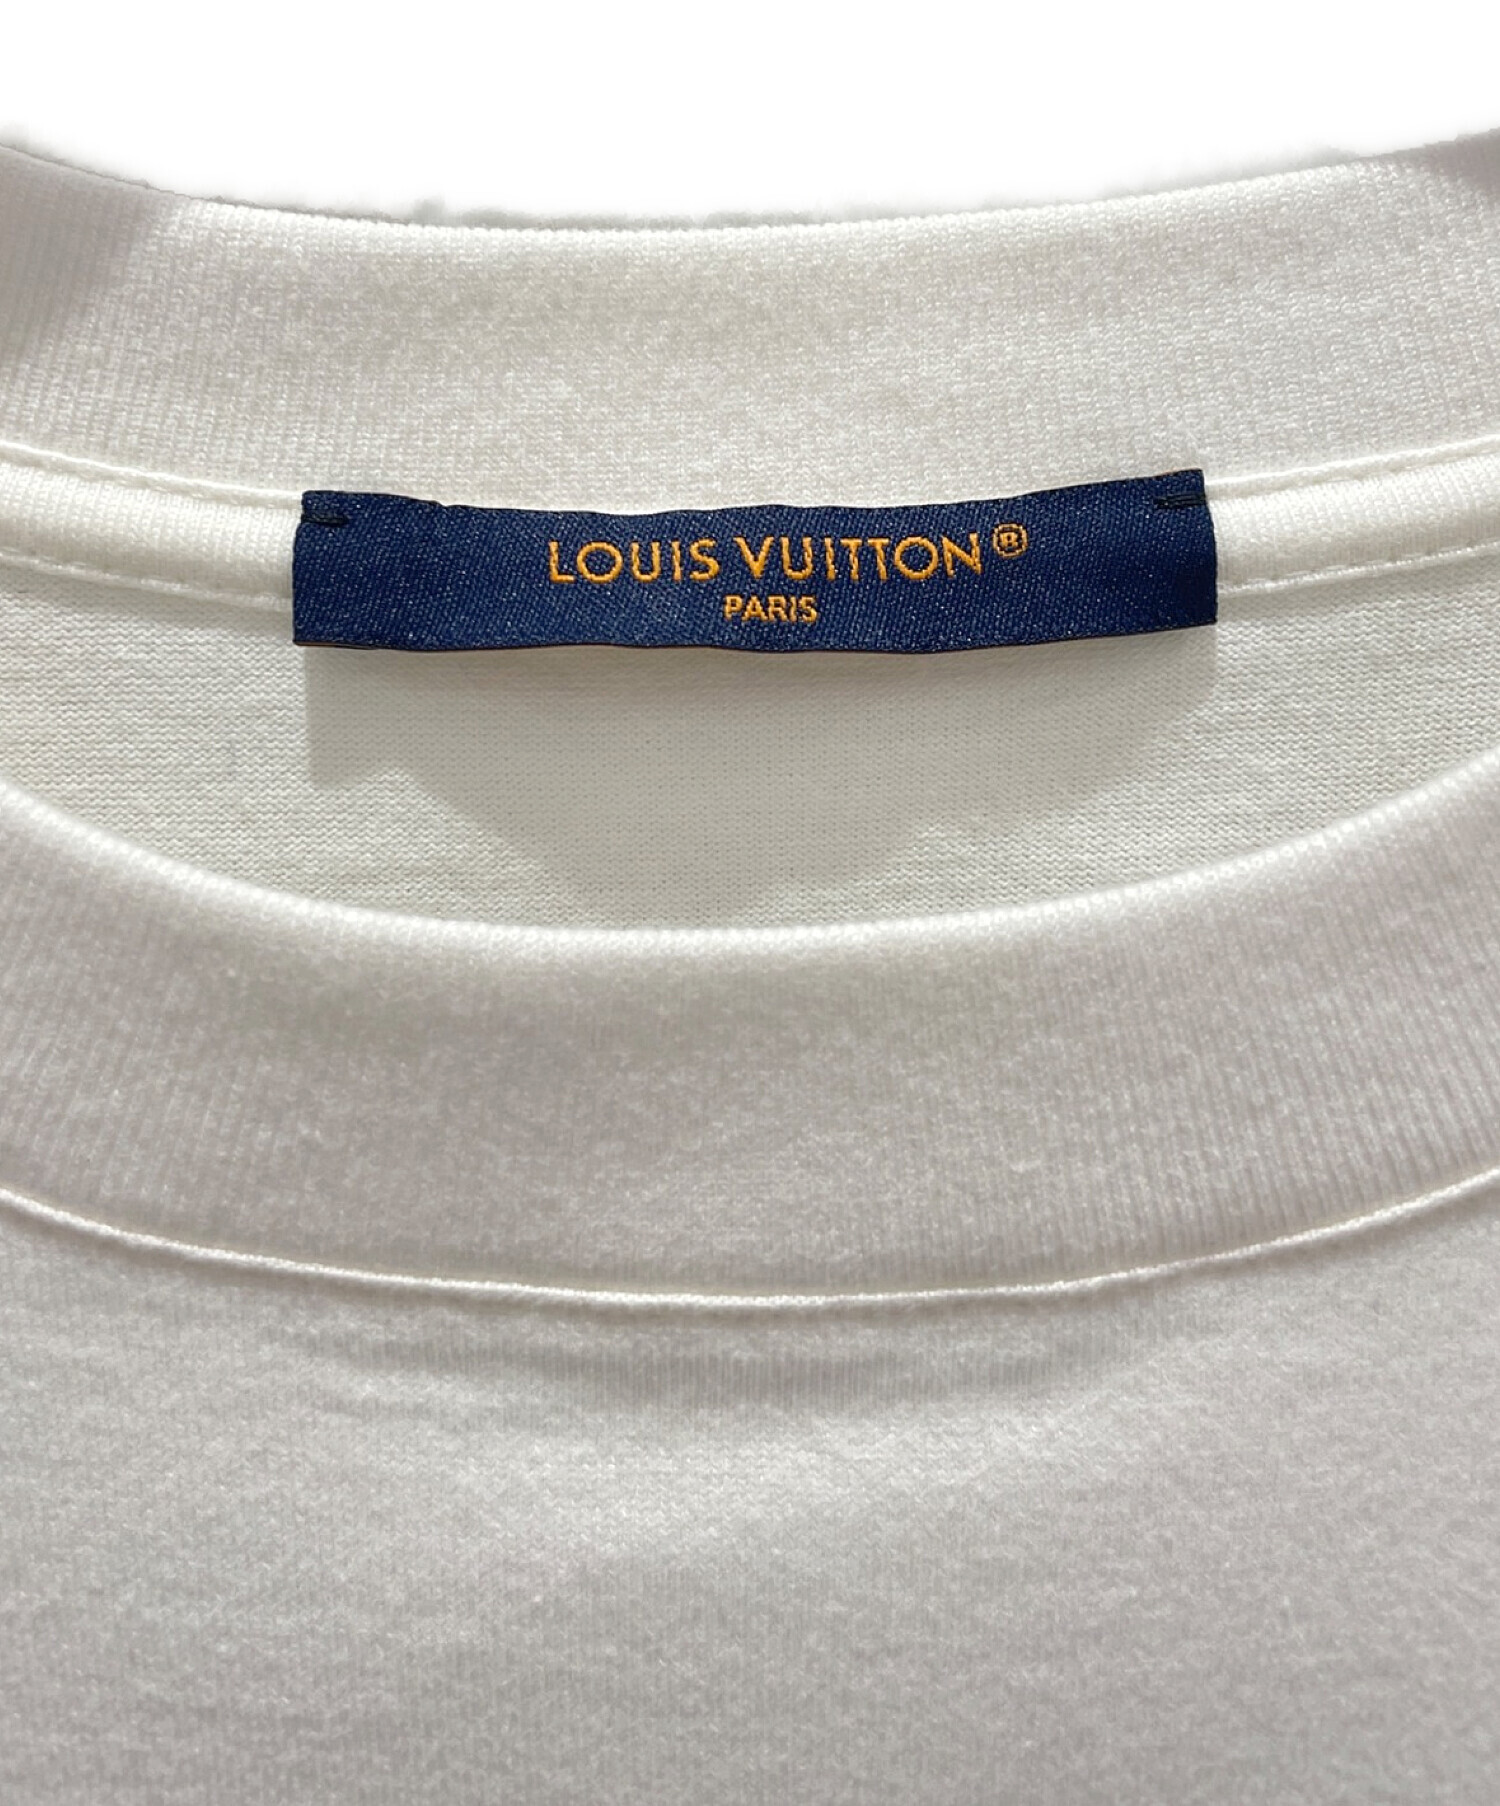 LOUIS VUITTON (ルイ ヴィトン) プリンテッドコットンTシャツ ホワイト サイズ:M